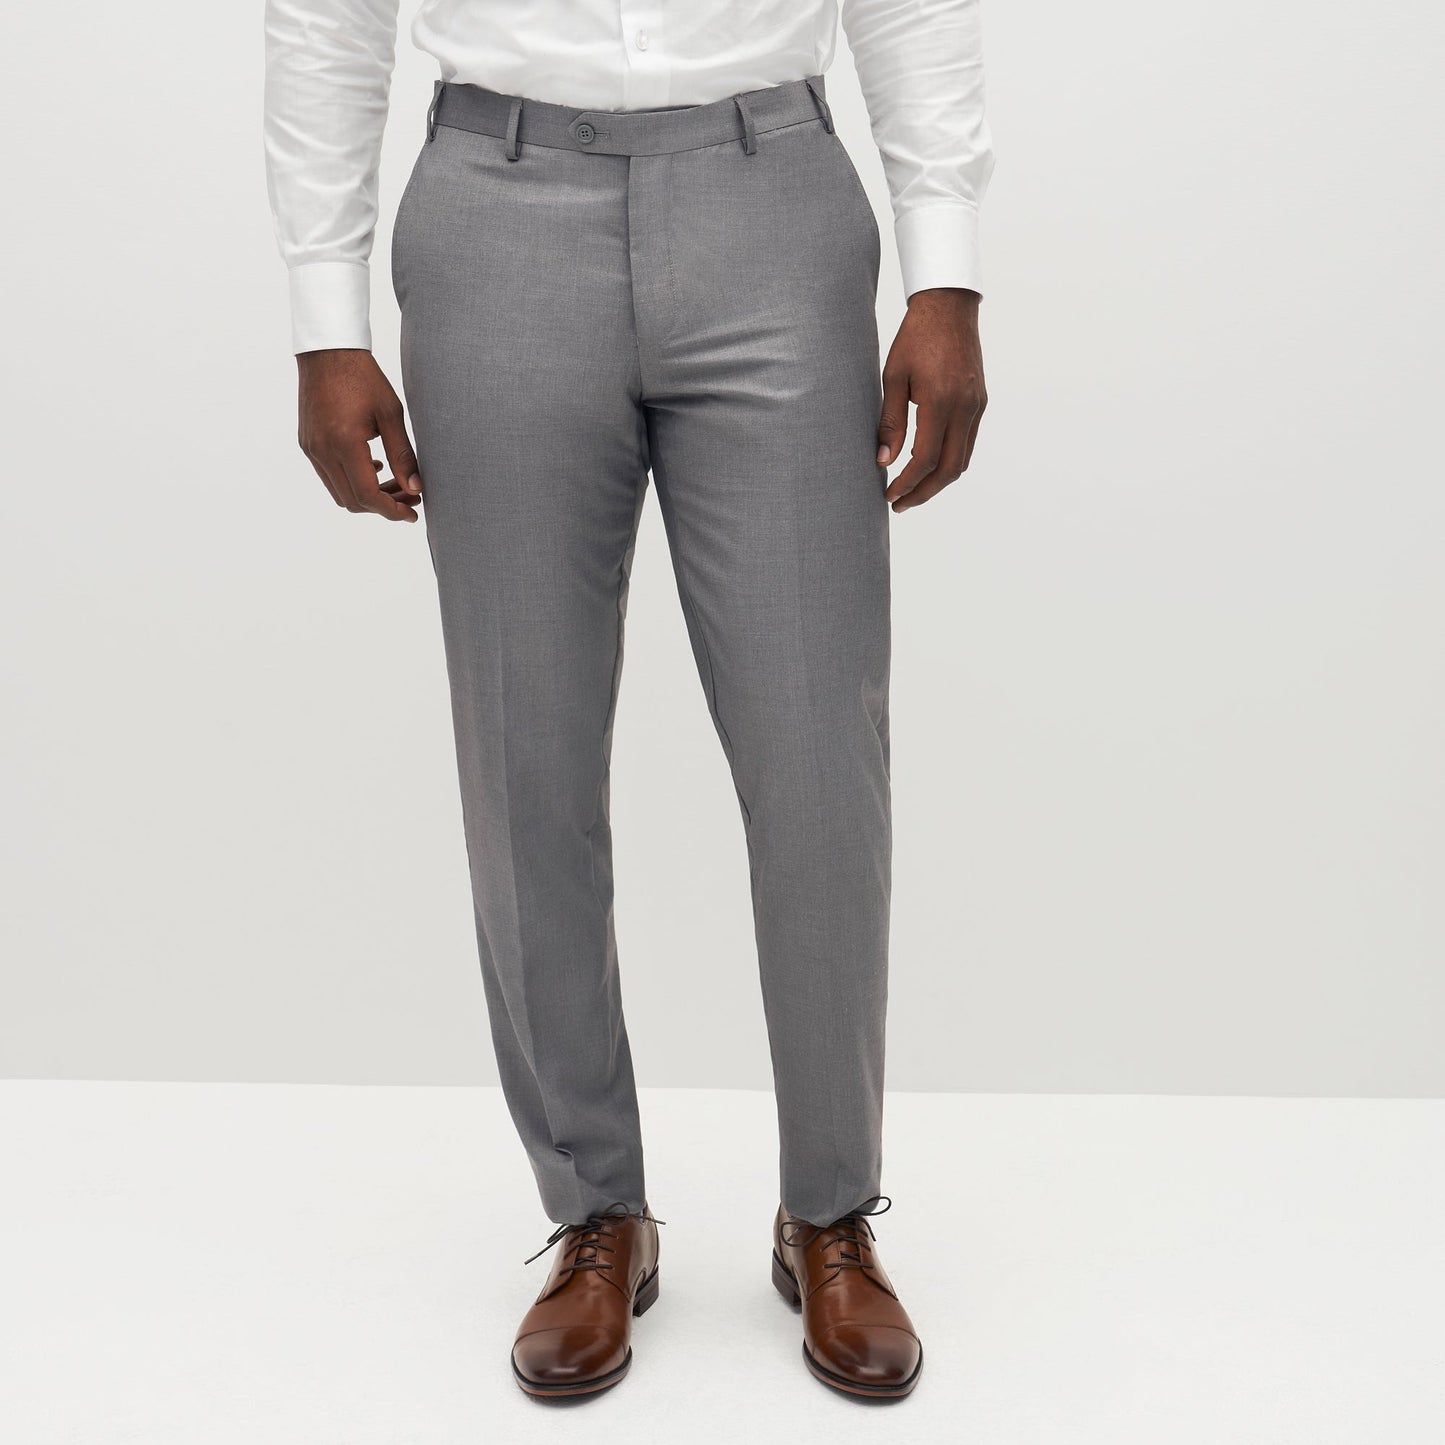 Textured Gray Suit Pants (Comfort Stretch) by SuitShop